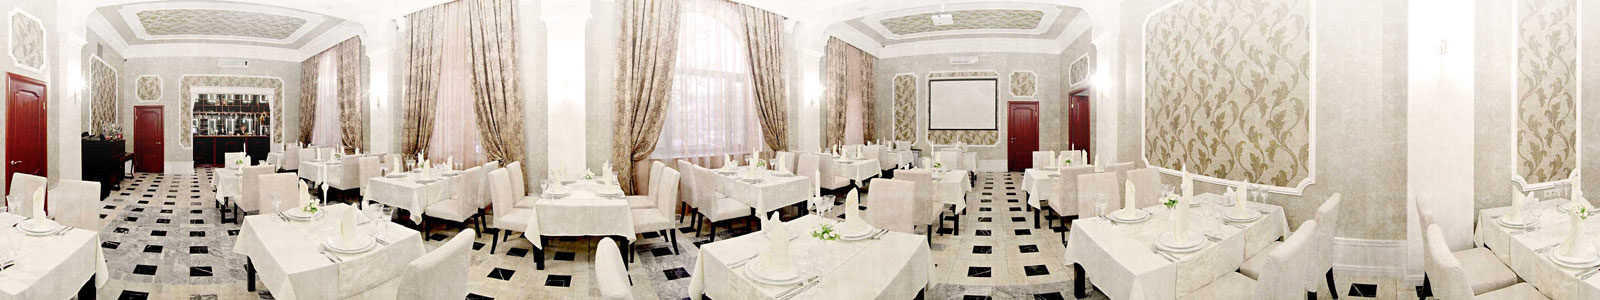 №4265 - Европейский ресторан, вид изнутри